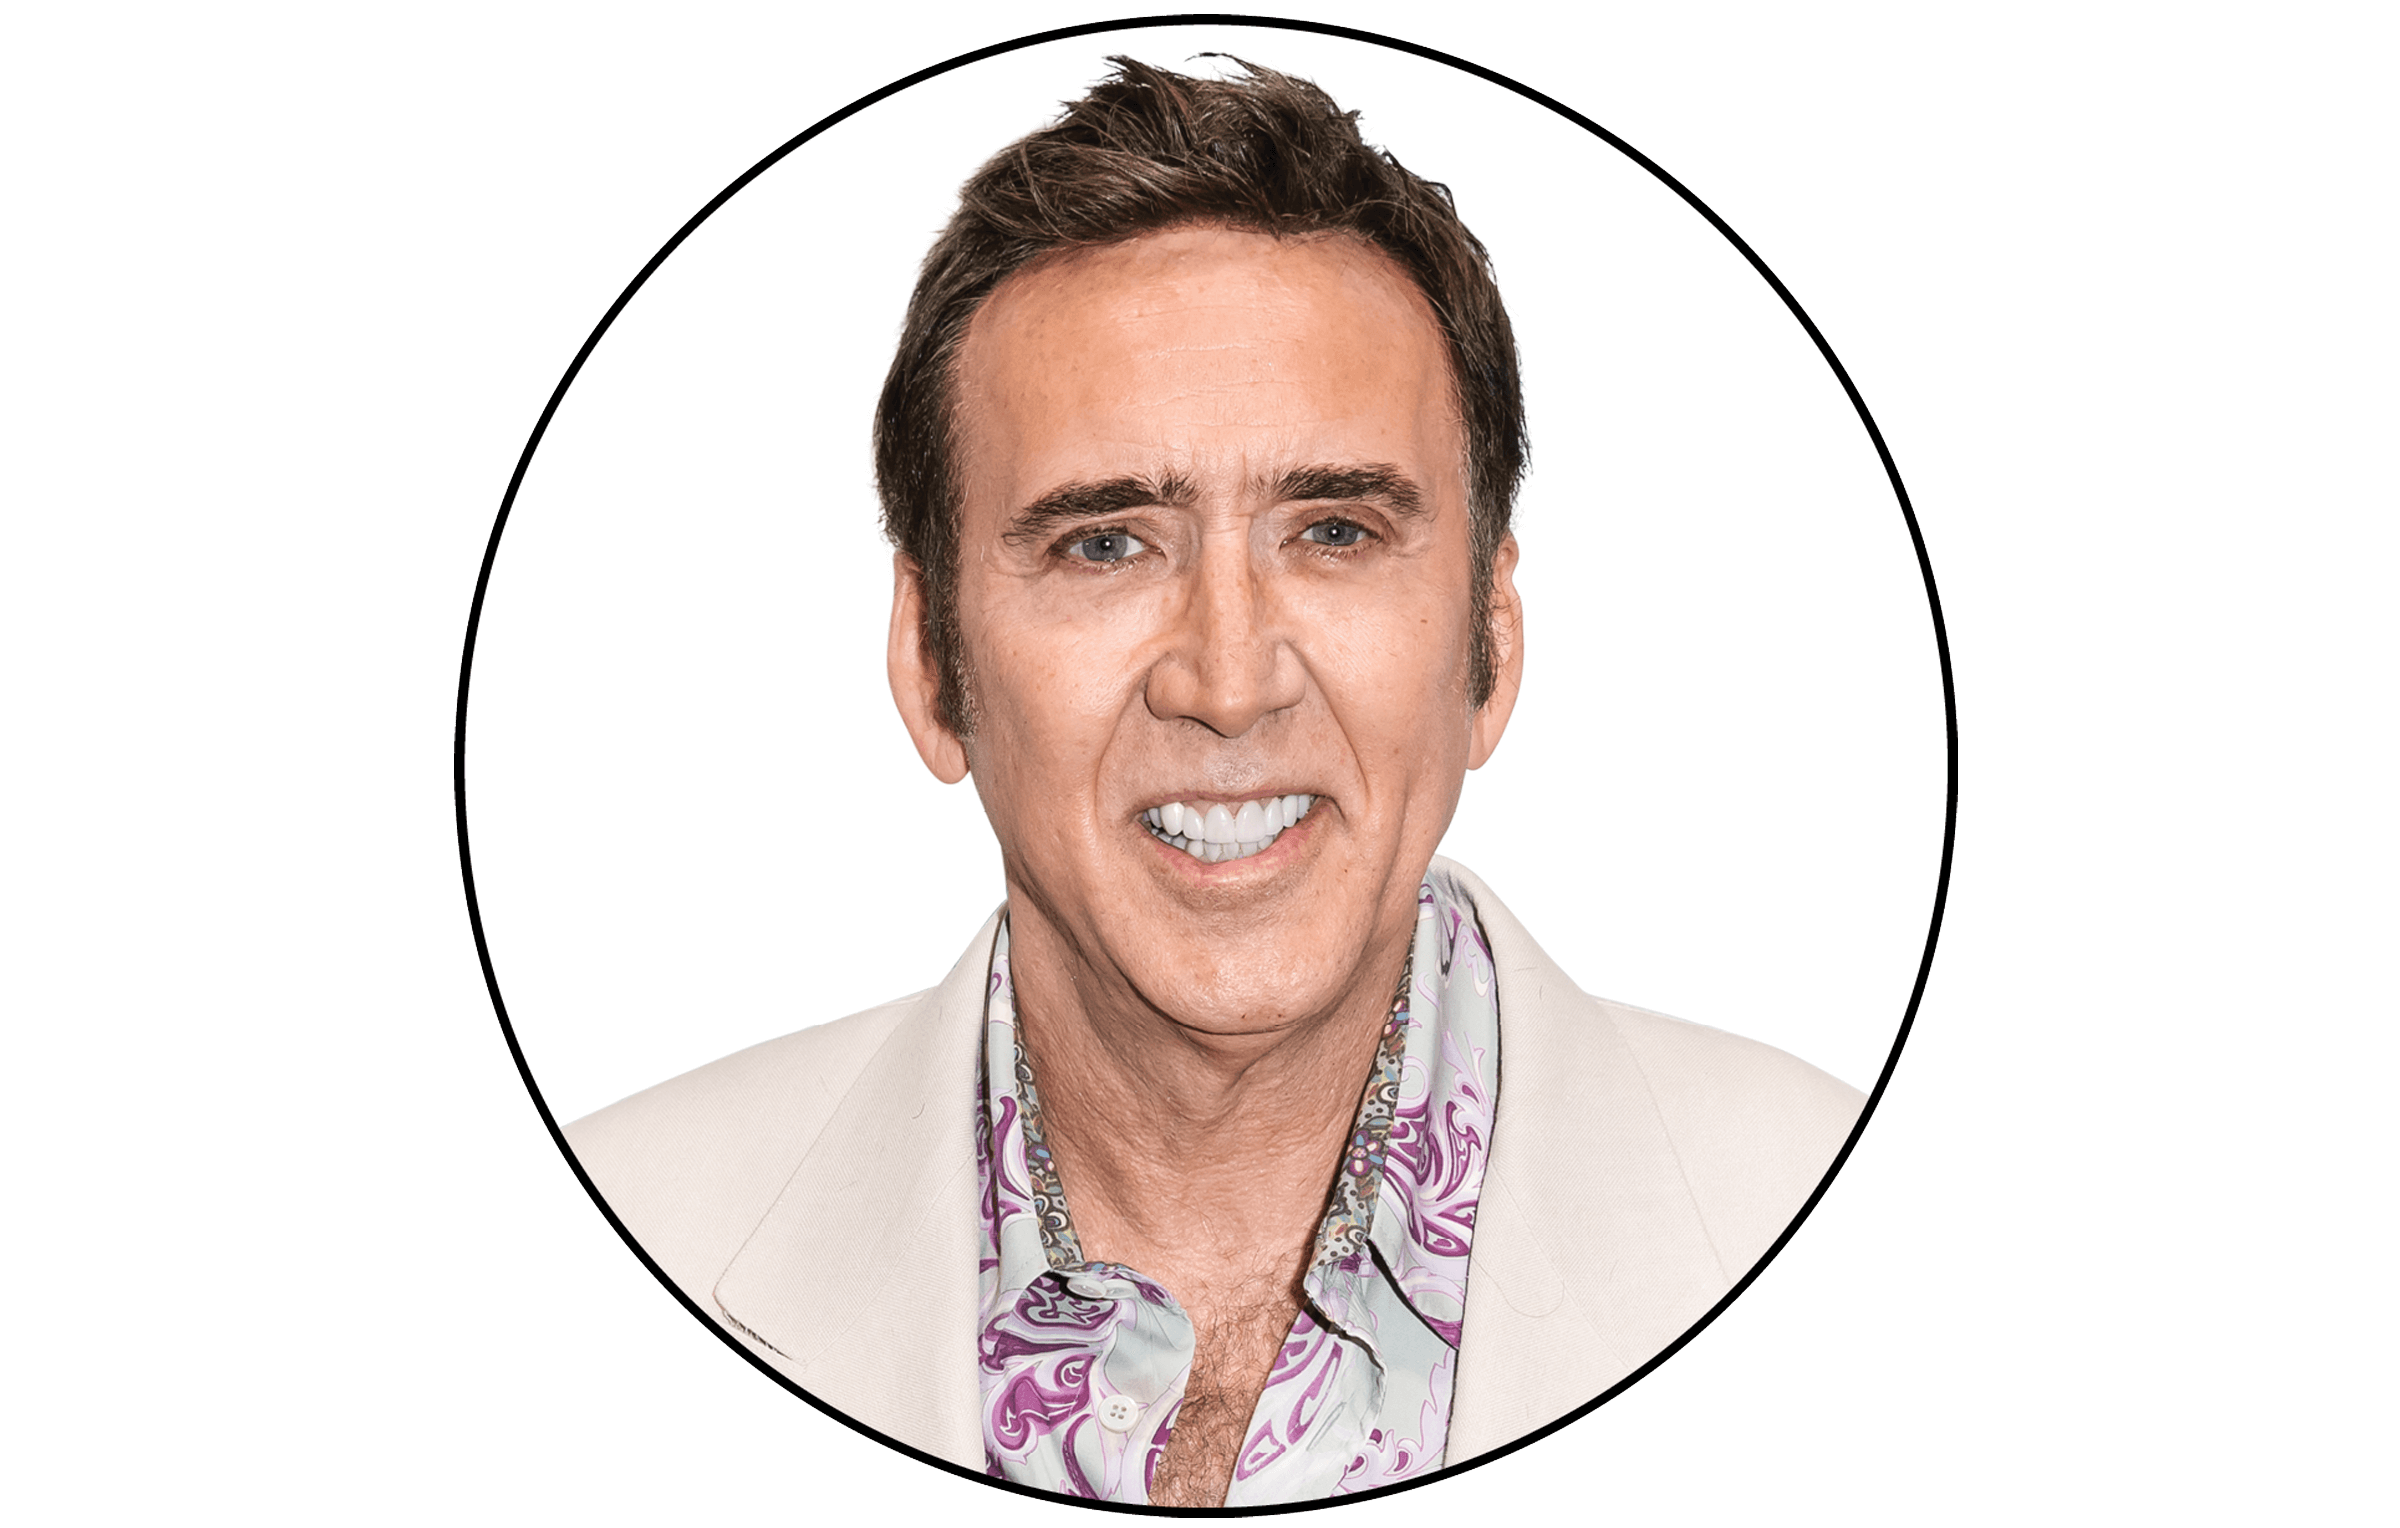 Headshot of Nicolas Cage